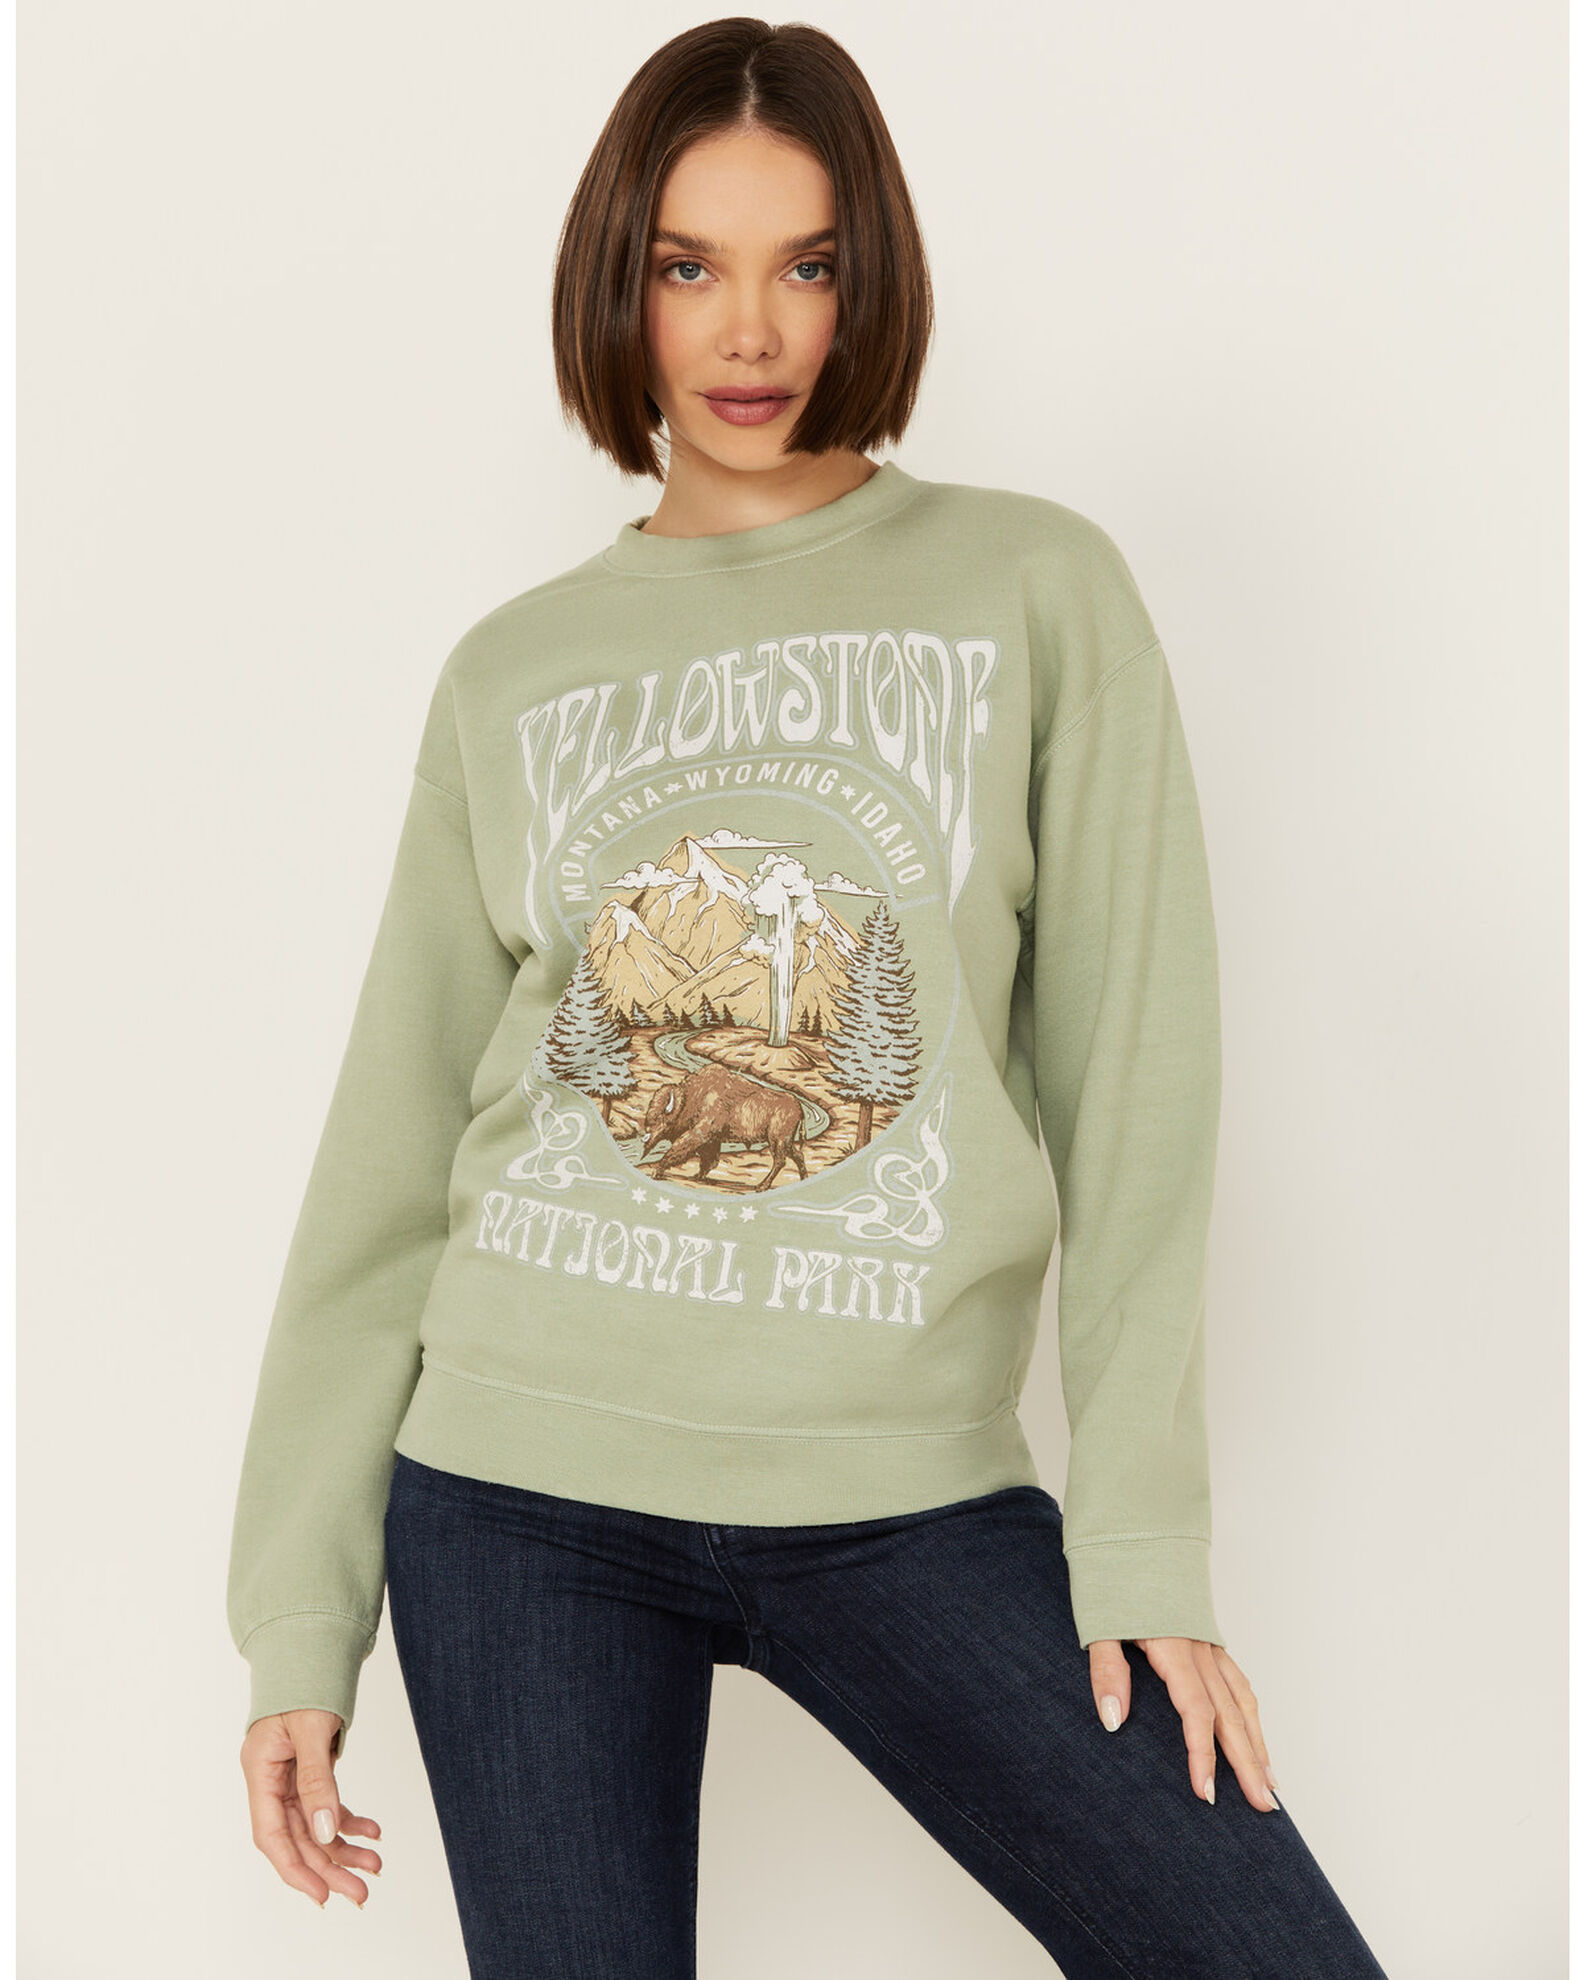 Youth Revolt Women's Yellowstone Sweatshirt